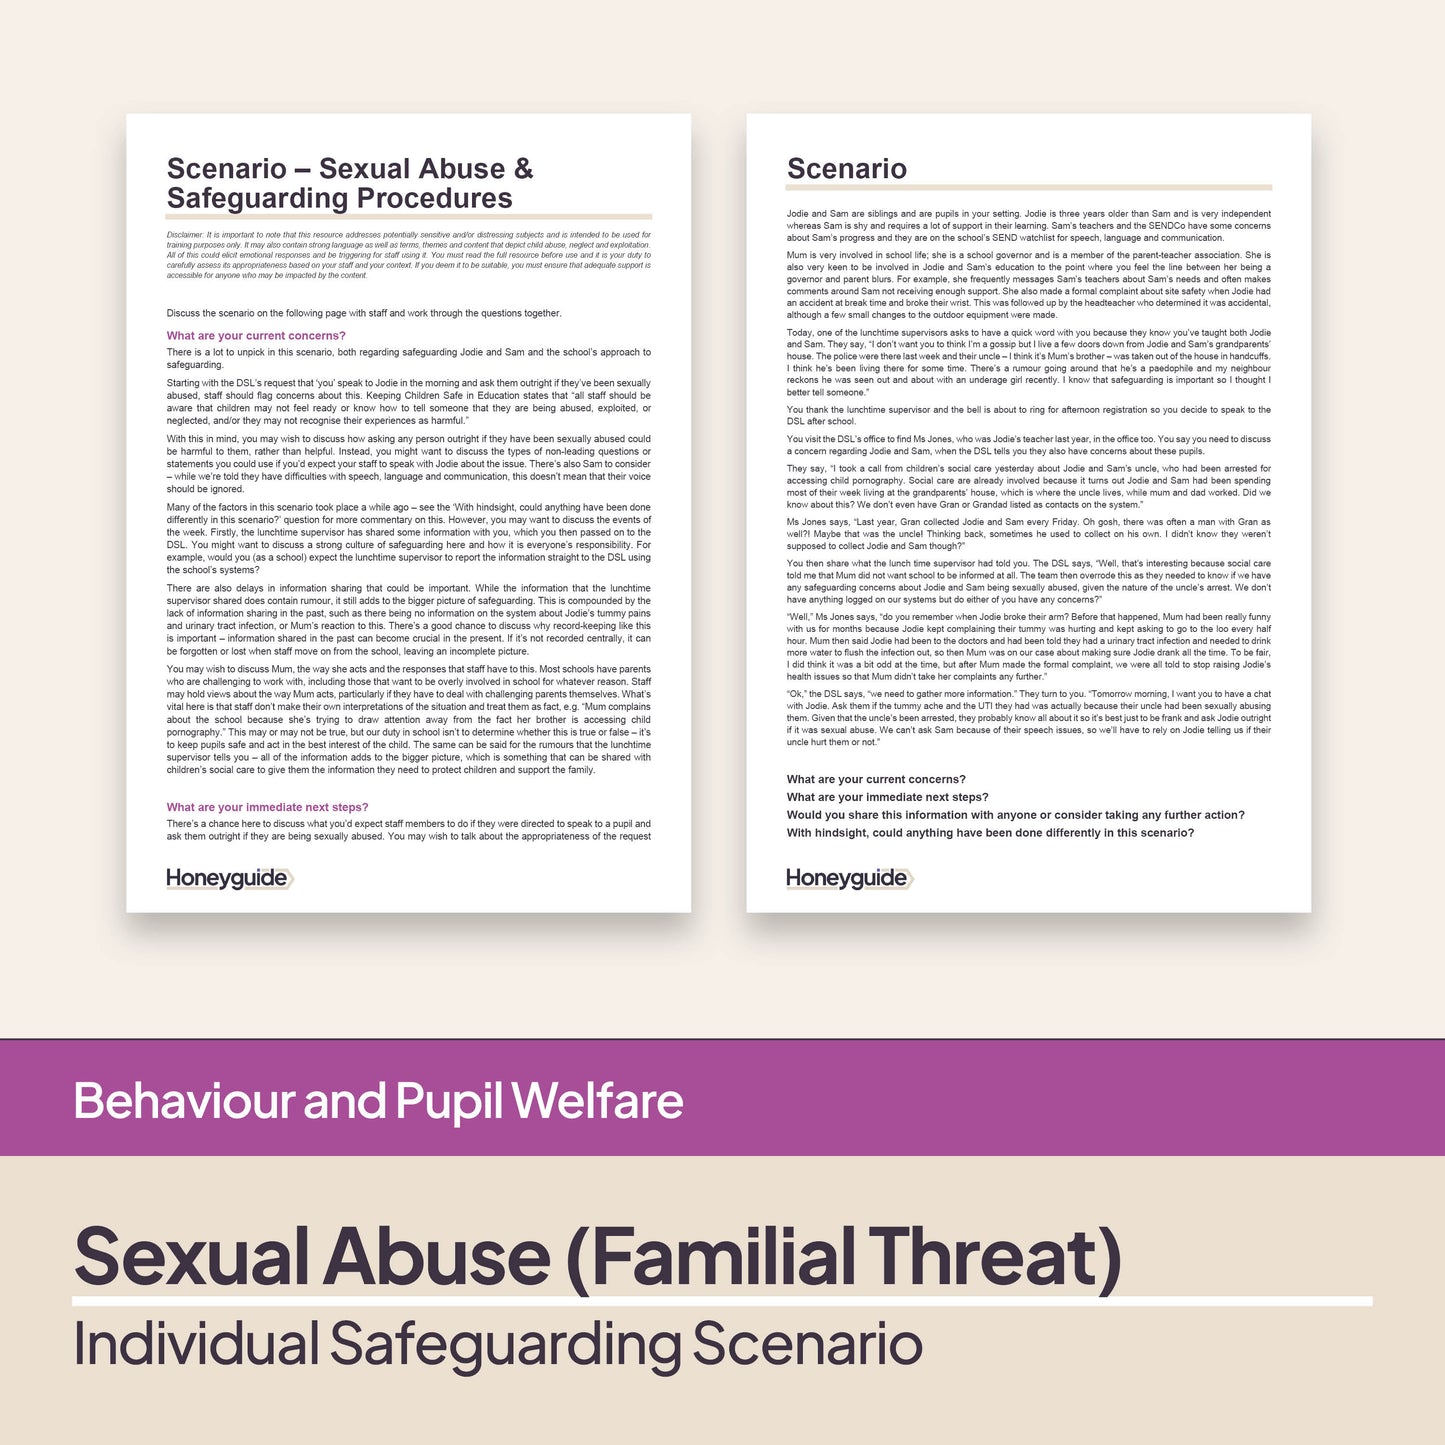 Safeguarding Scenario: Sexual Abuse (Familial Threat)